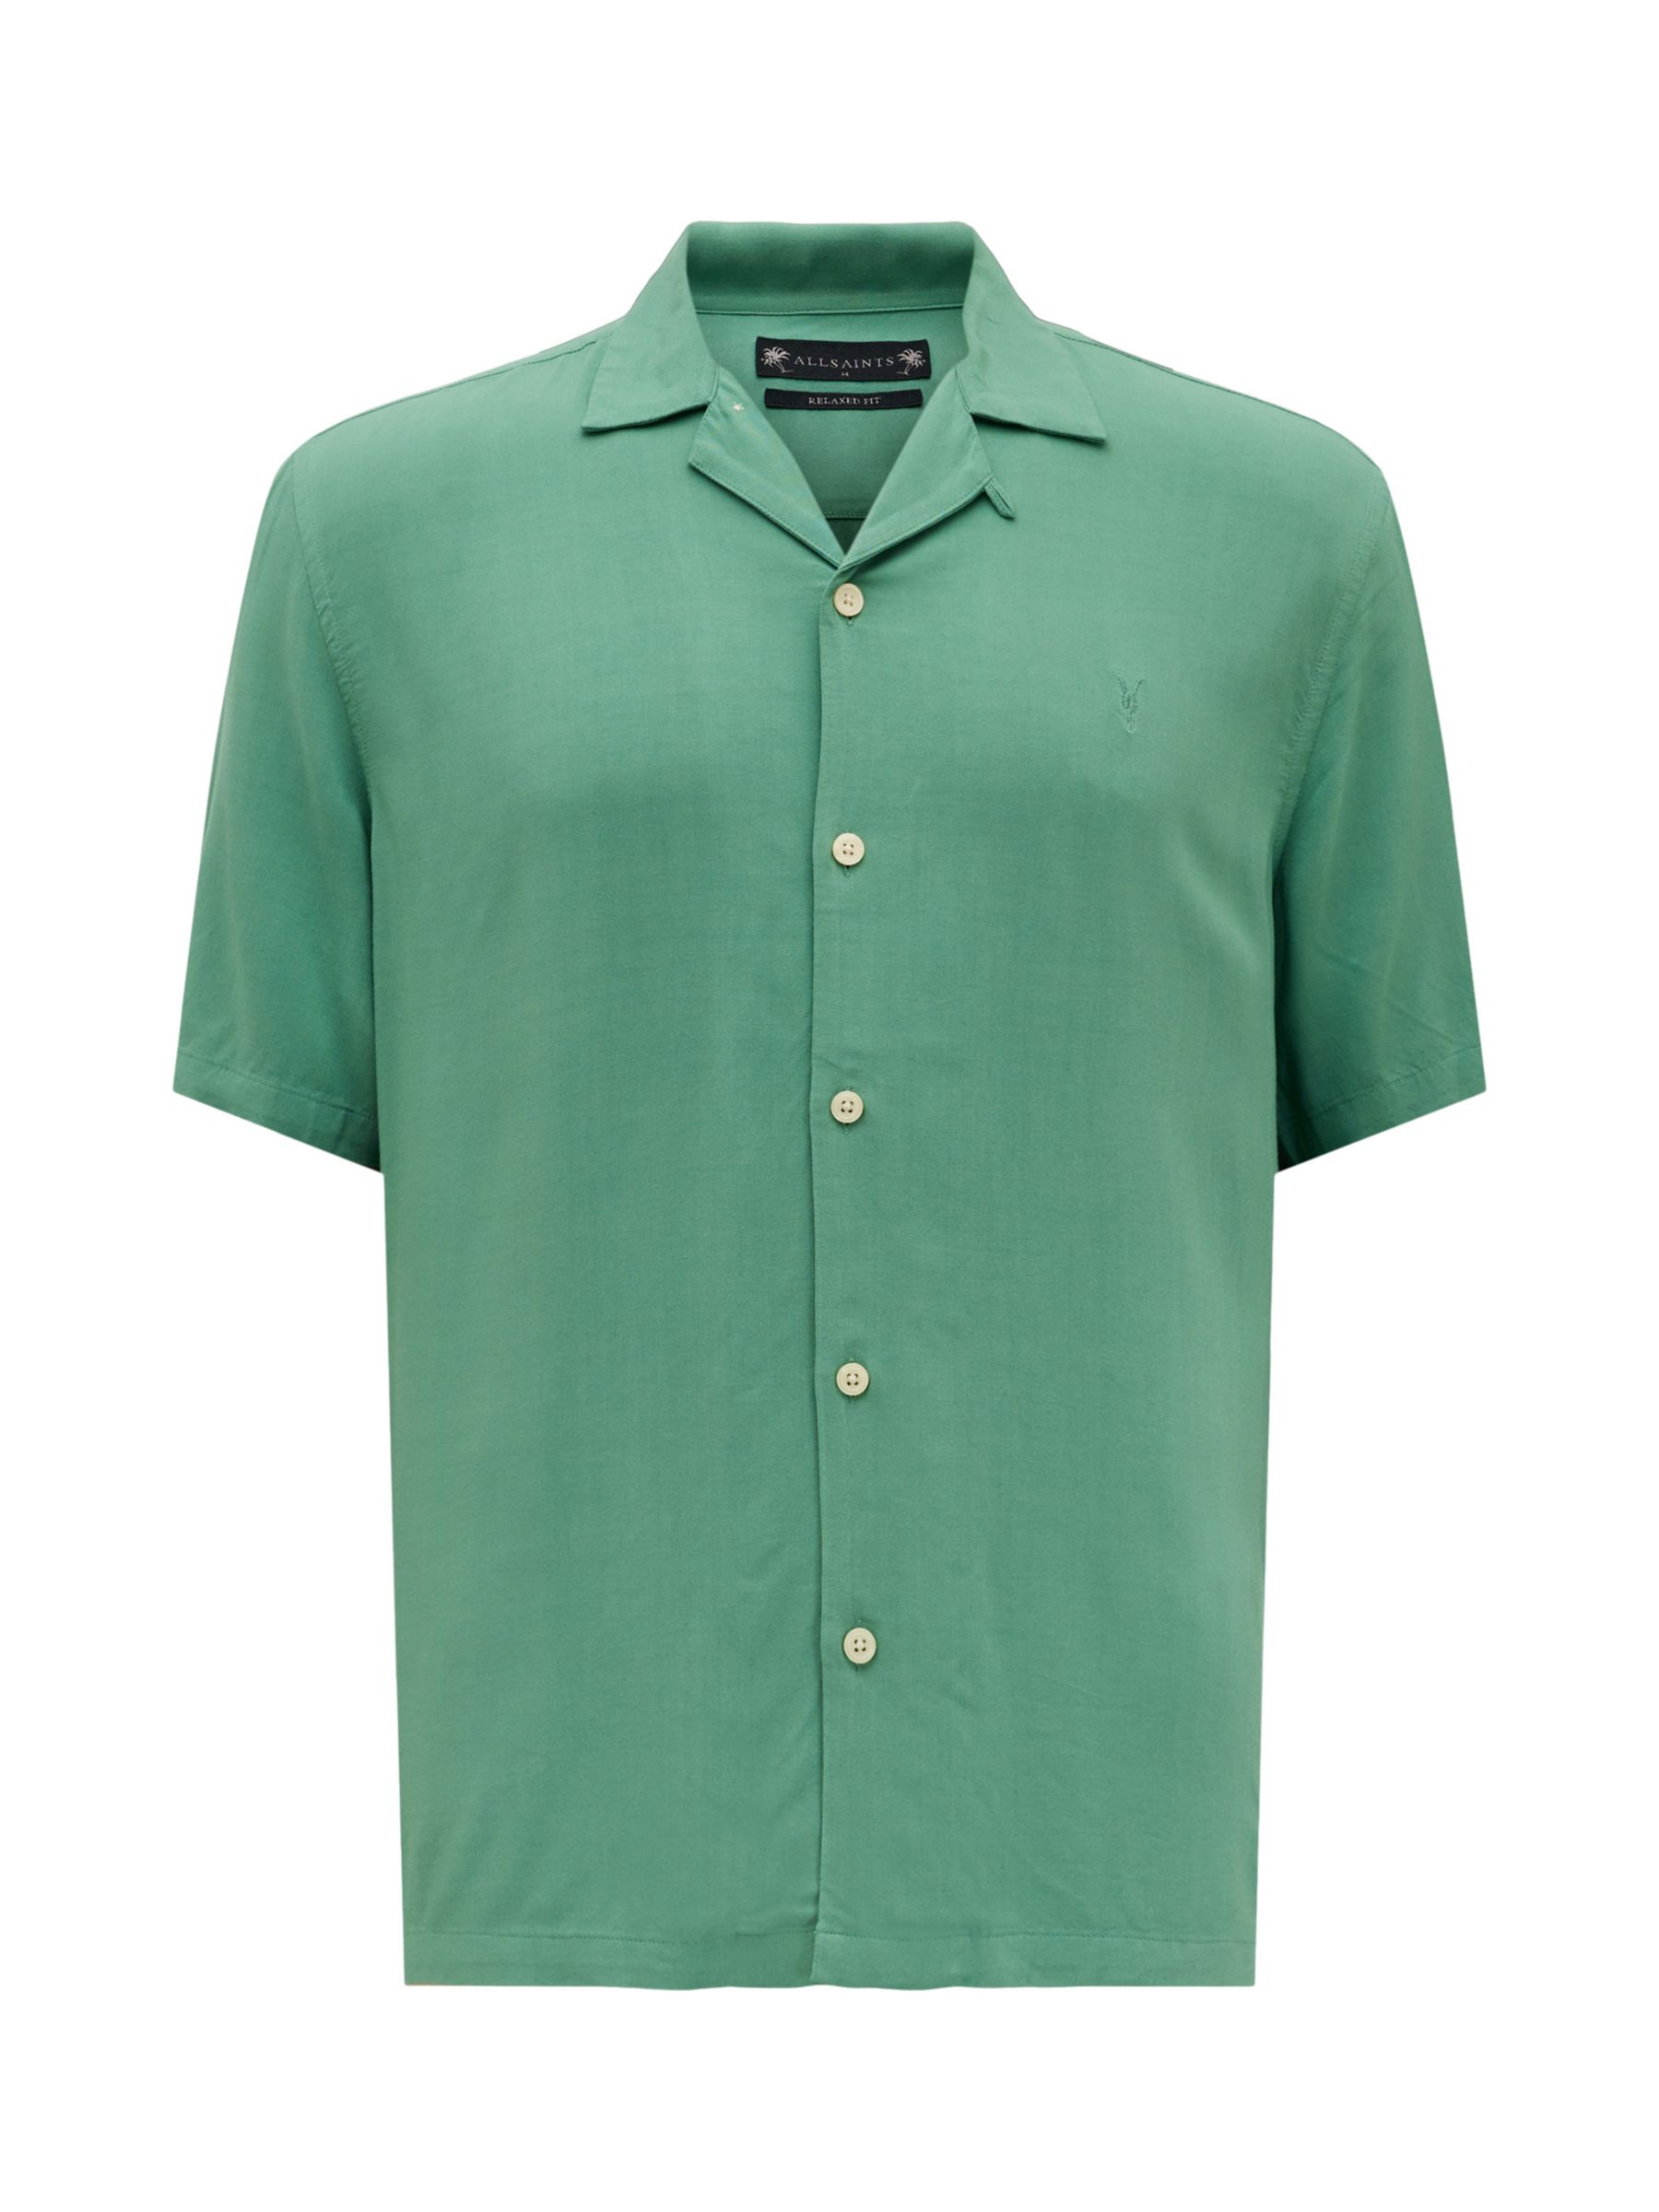 AllSaints Venice Short Sleeve Shirt, Dark Thyme Green at John Lewis ...